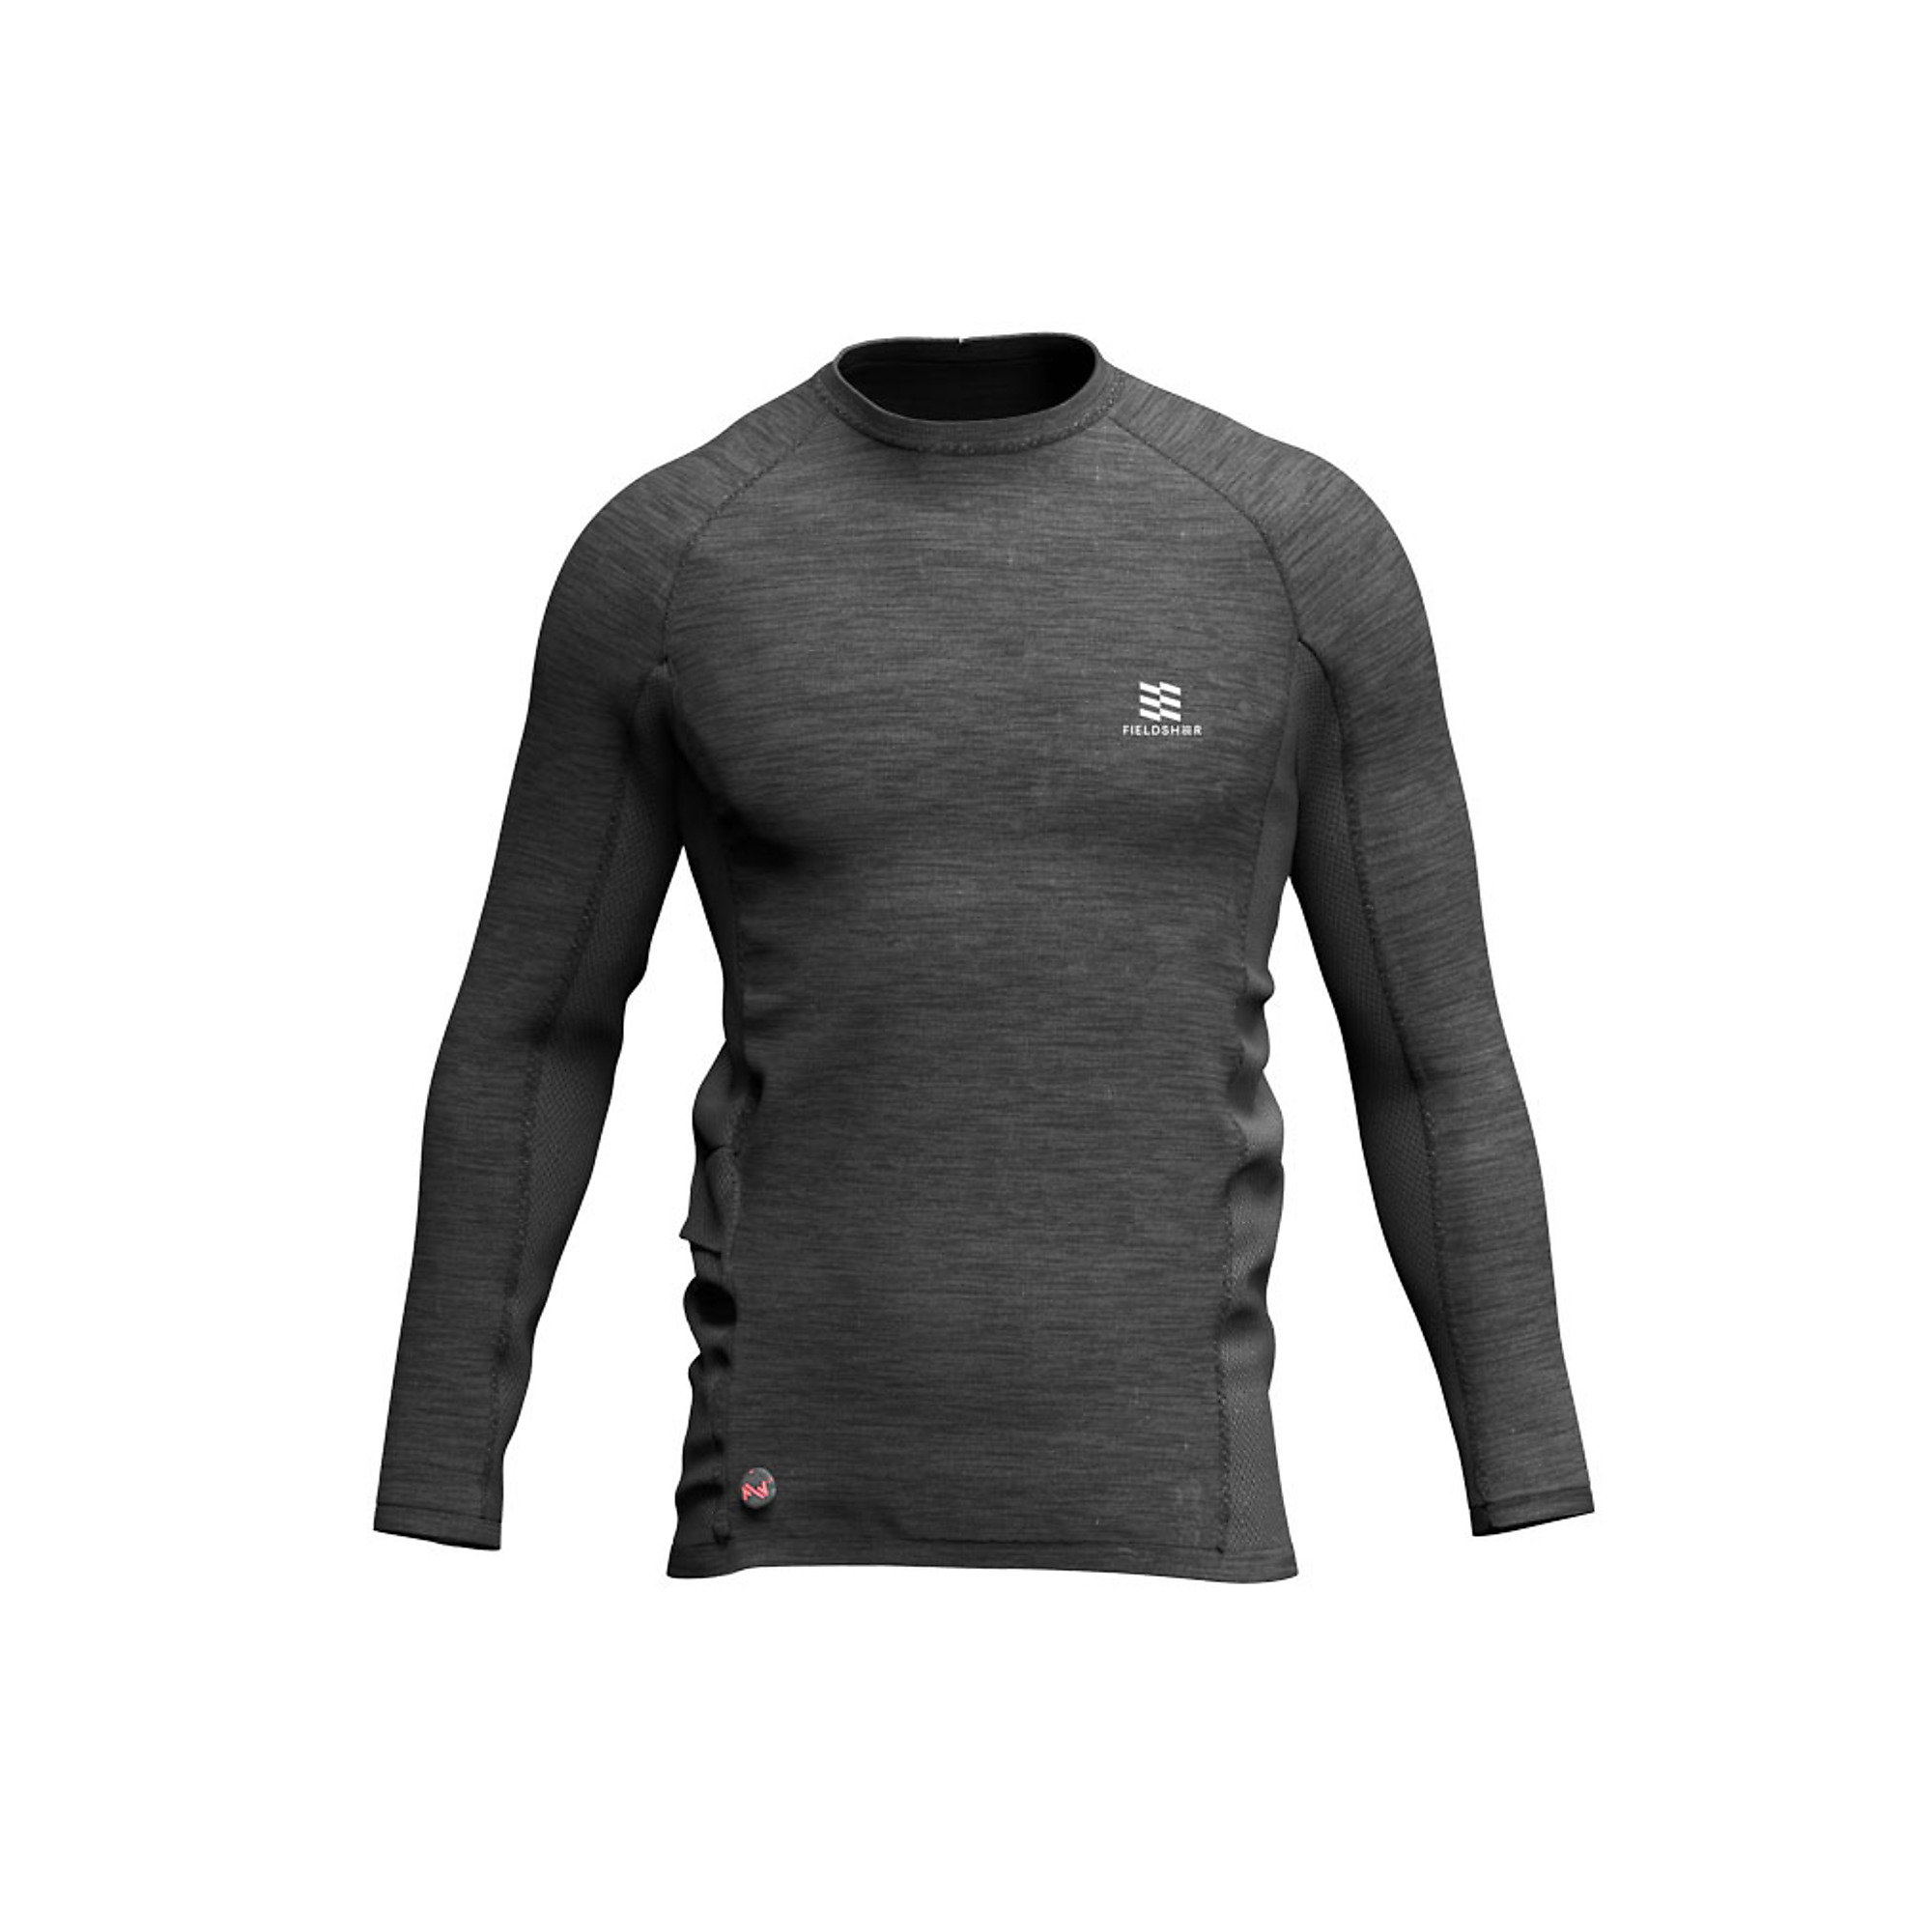 Fieldsheer, Men's Primer Heated Baselayer Shirt, Size XL, Color Black, Model MWMT11010520